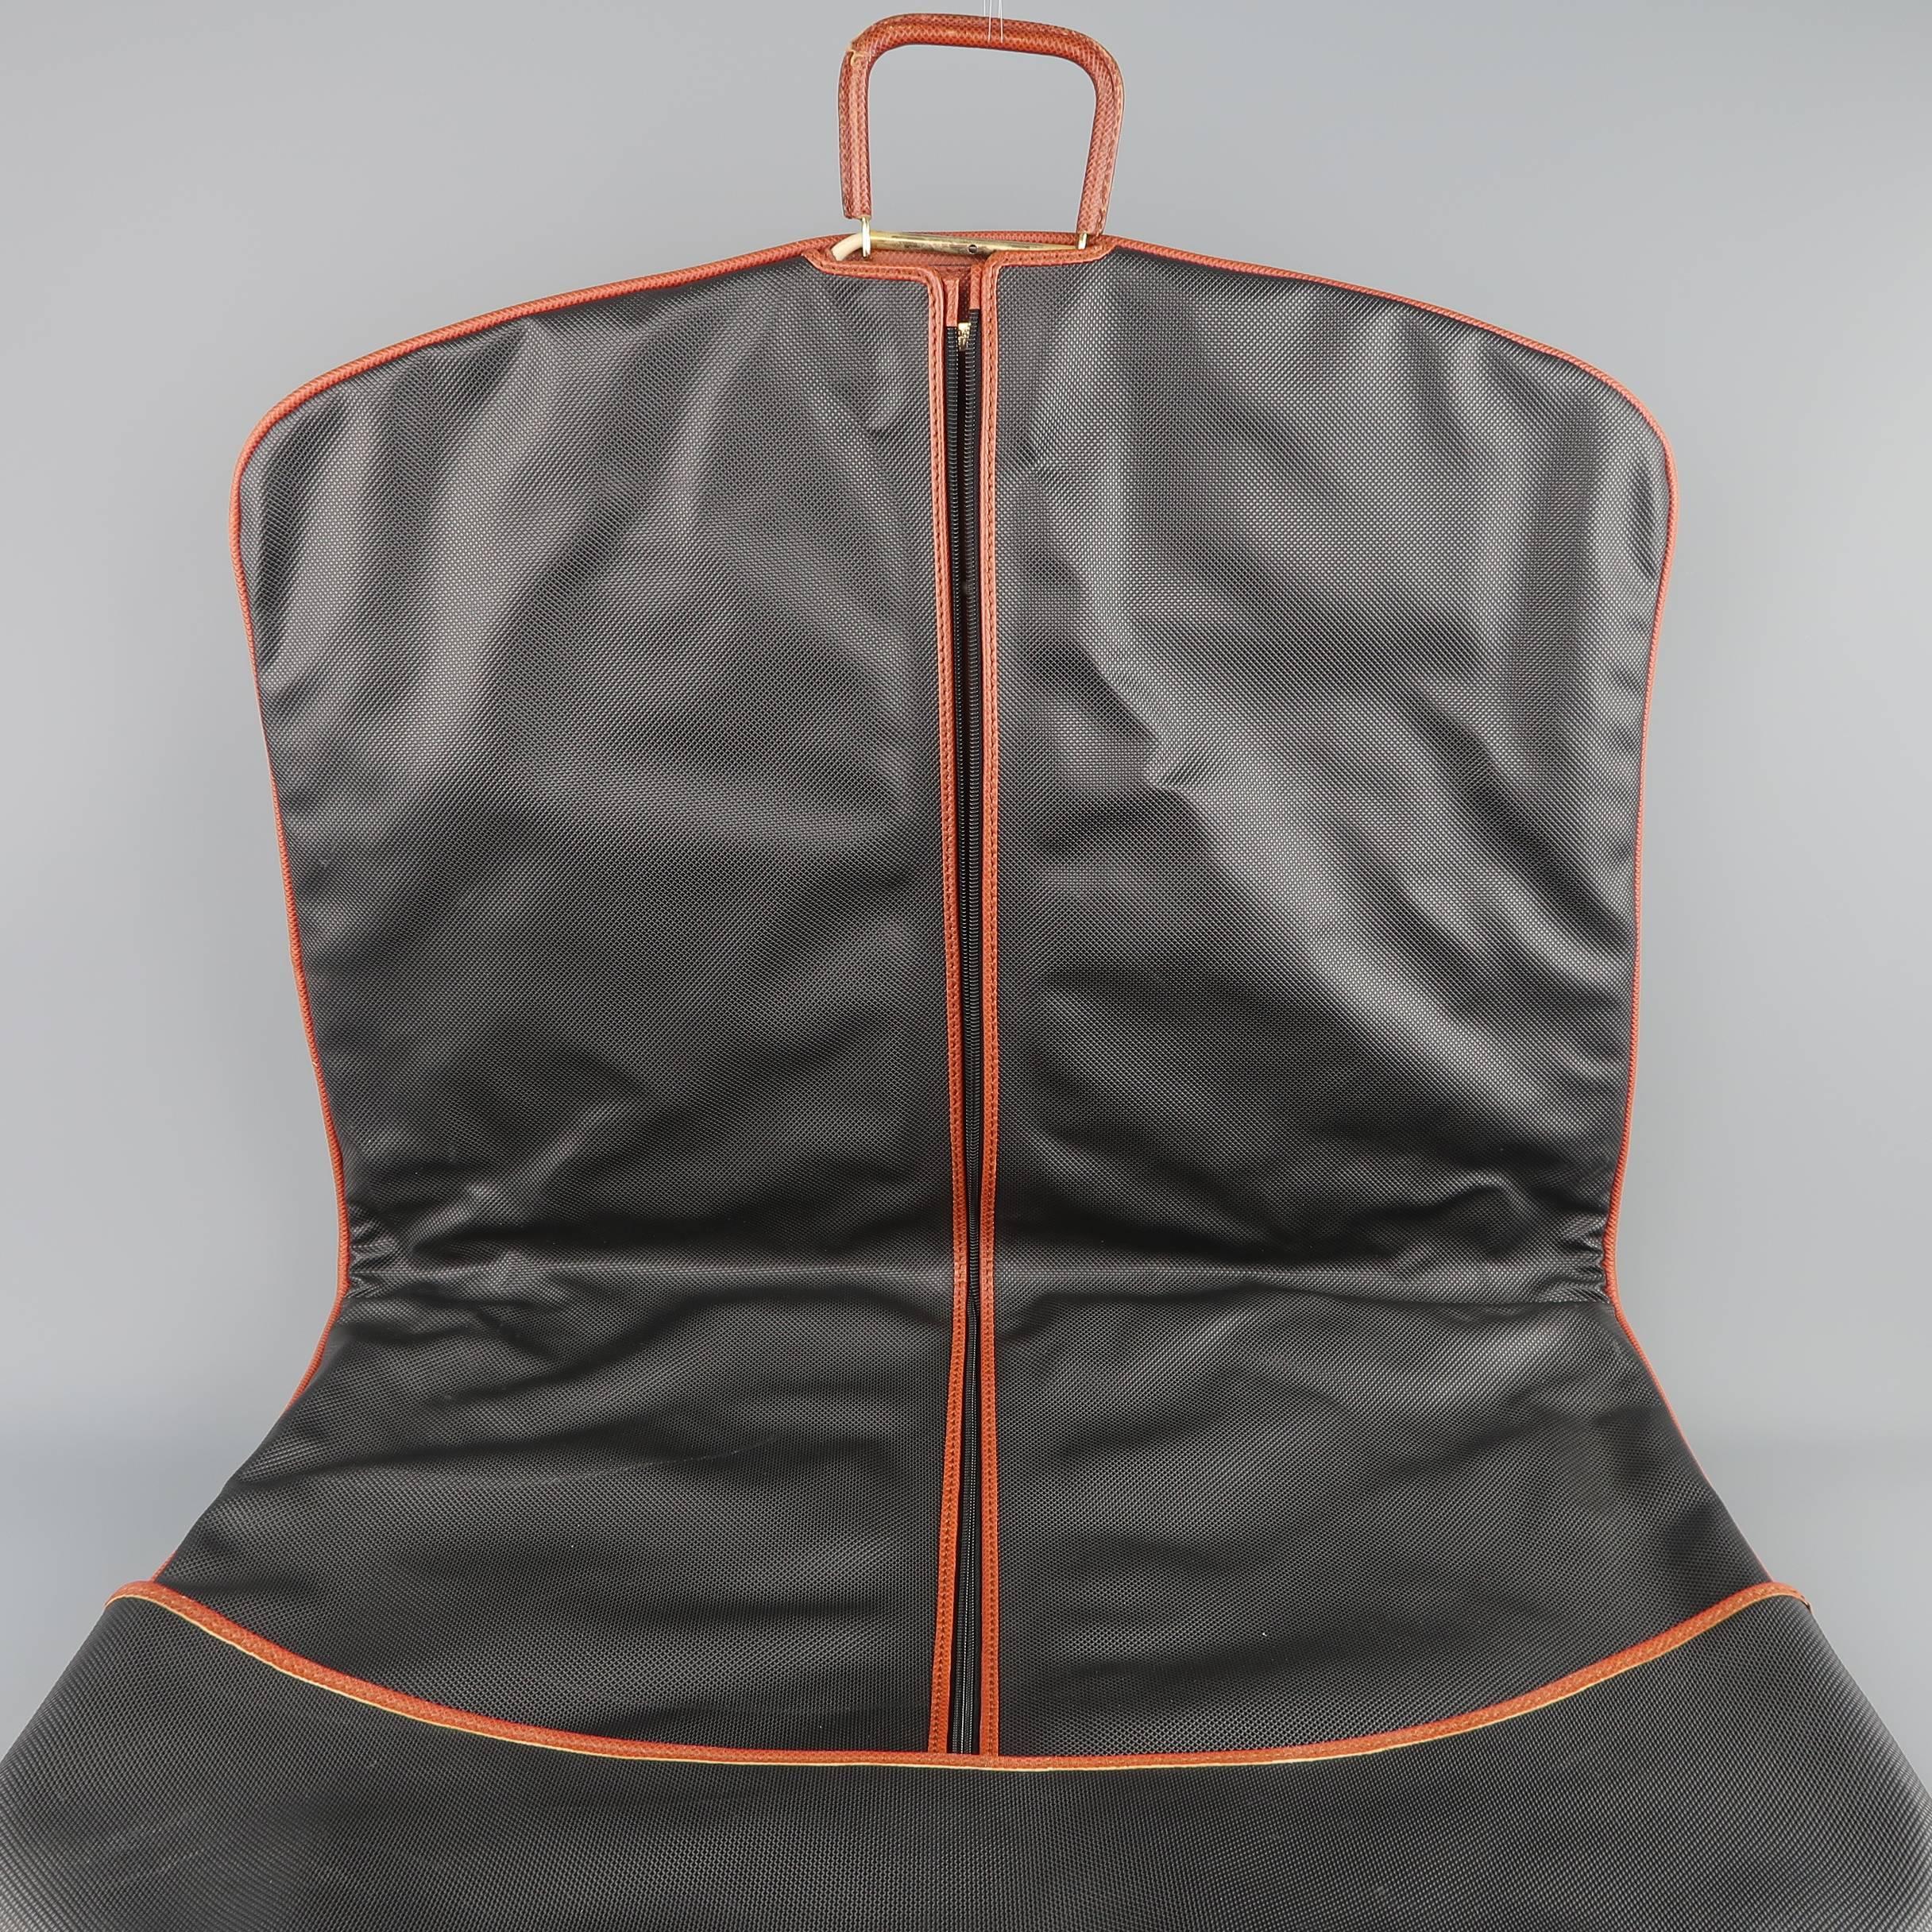 Vintage BOTTEGA VENETA Black & Brown Textured Leather Garment Bag 1